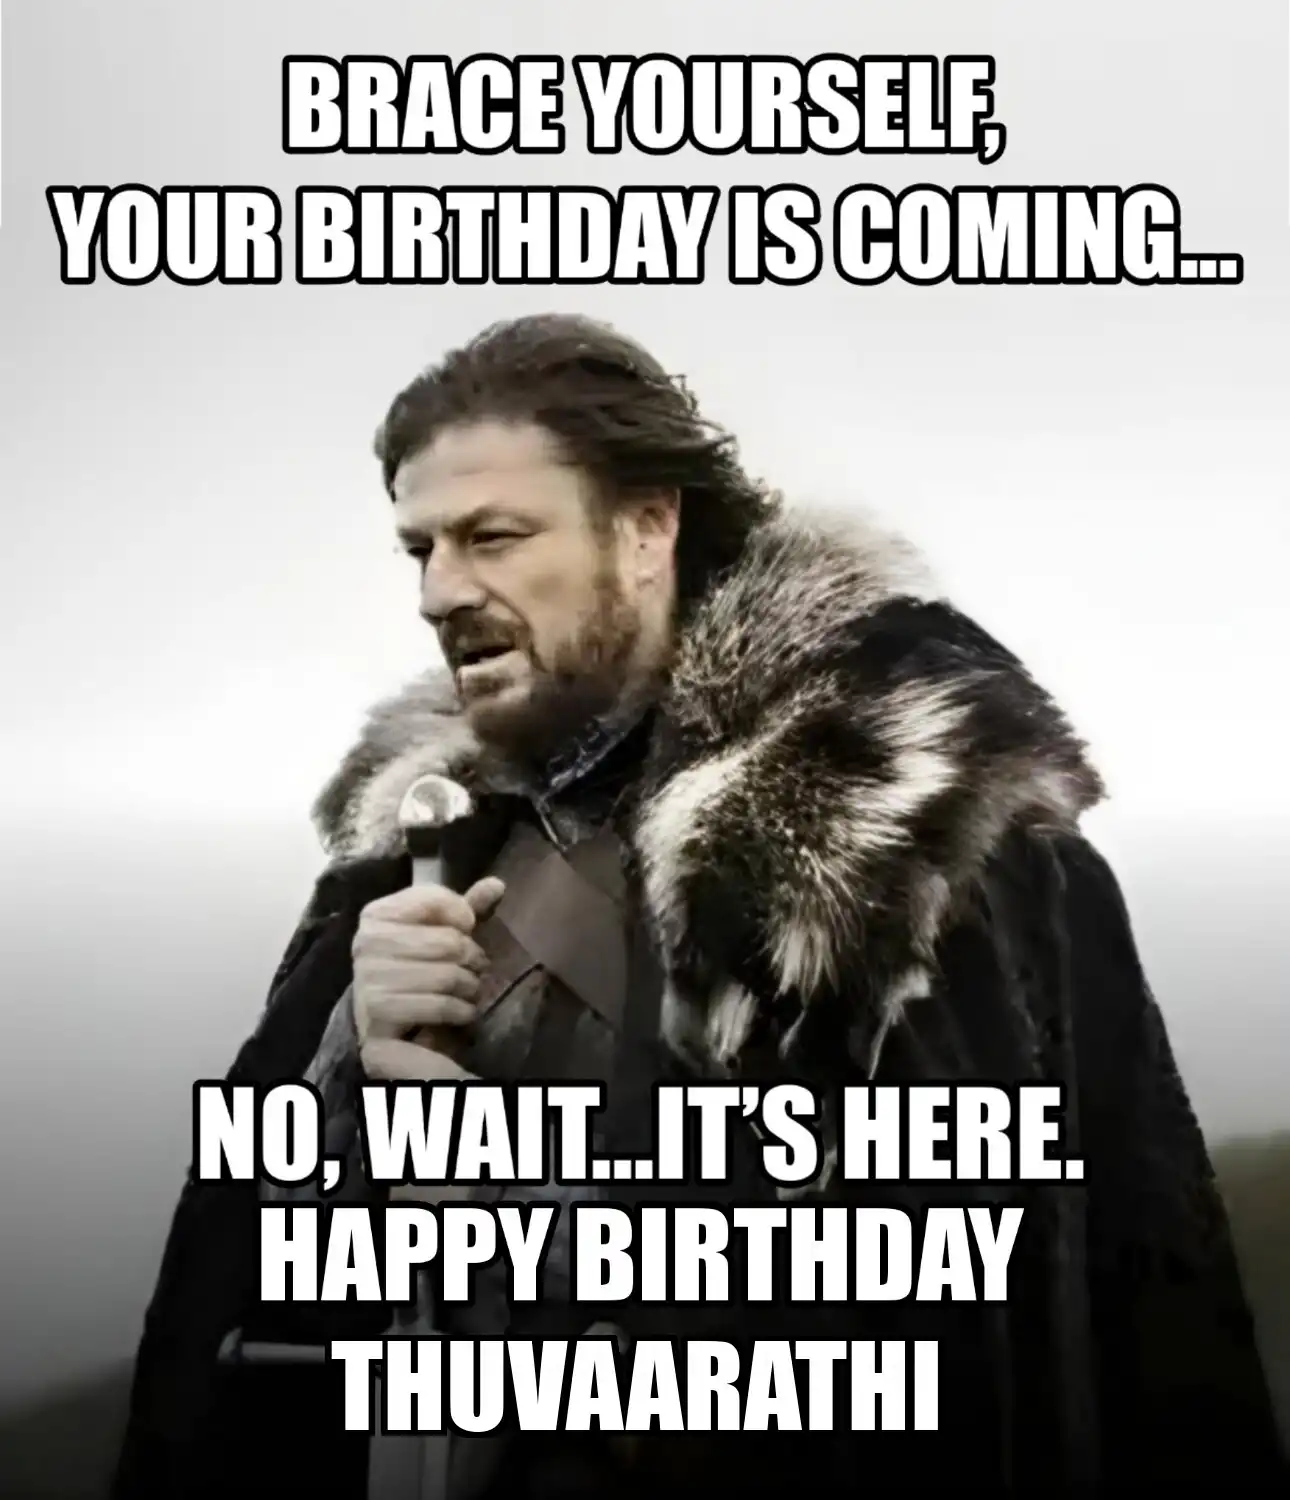 Happy Birthday Thuvaarathi Brace Yourself Your Birthday Is Coming Meme